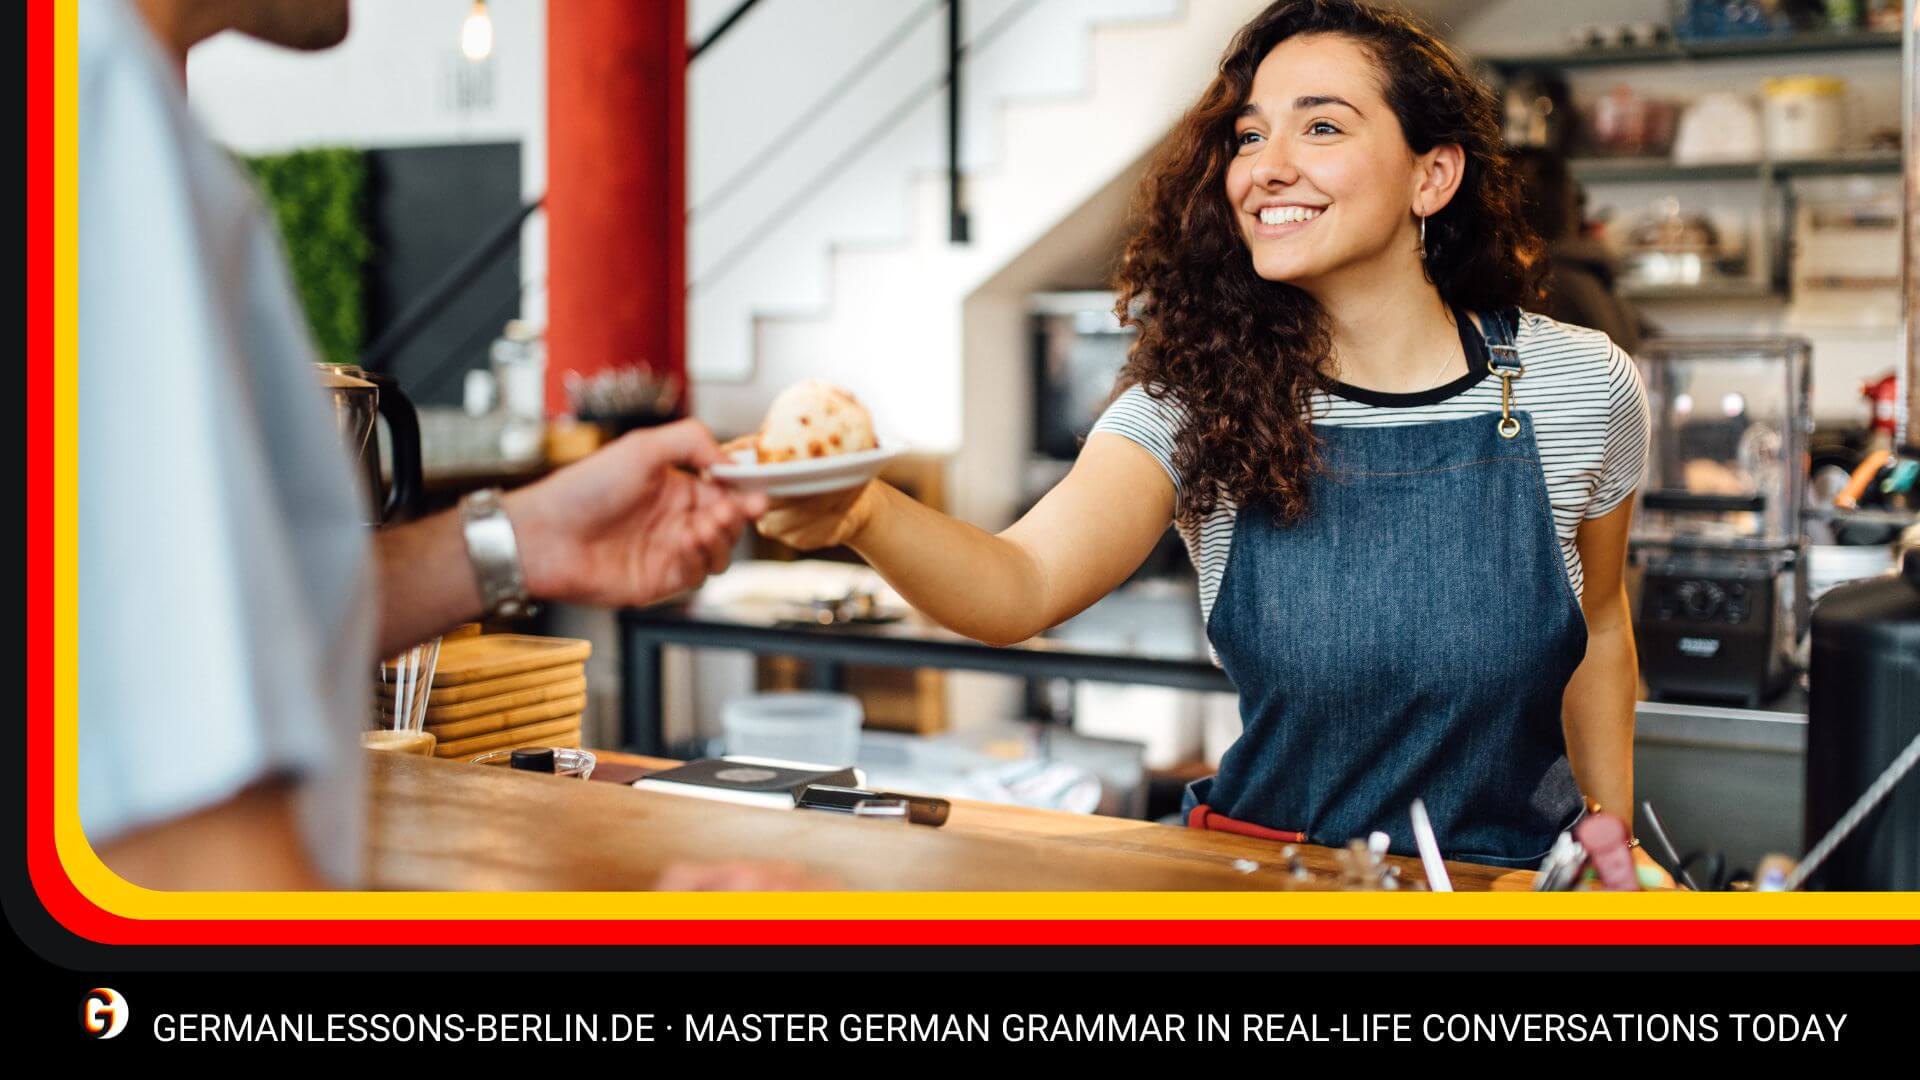 Master German Grammar in Real-Life Conversations Today